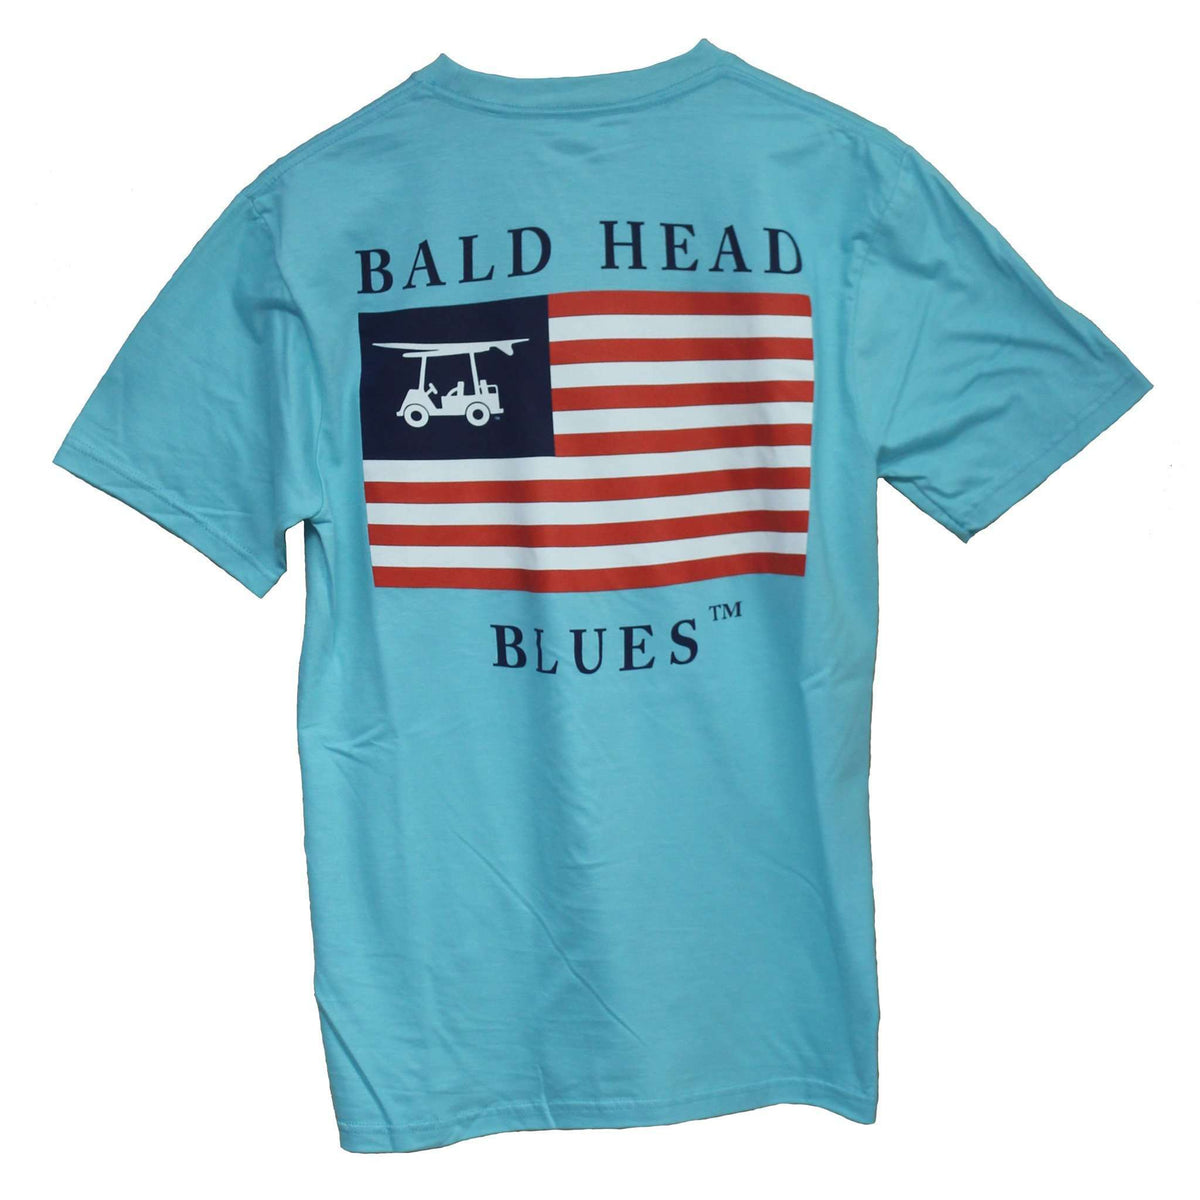 USA Tee in Aqua by Bald Head Blues - Country Club Prep